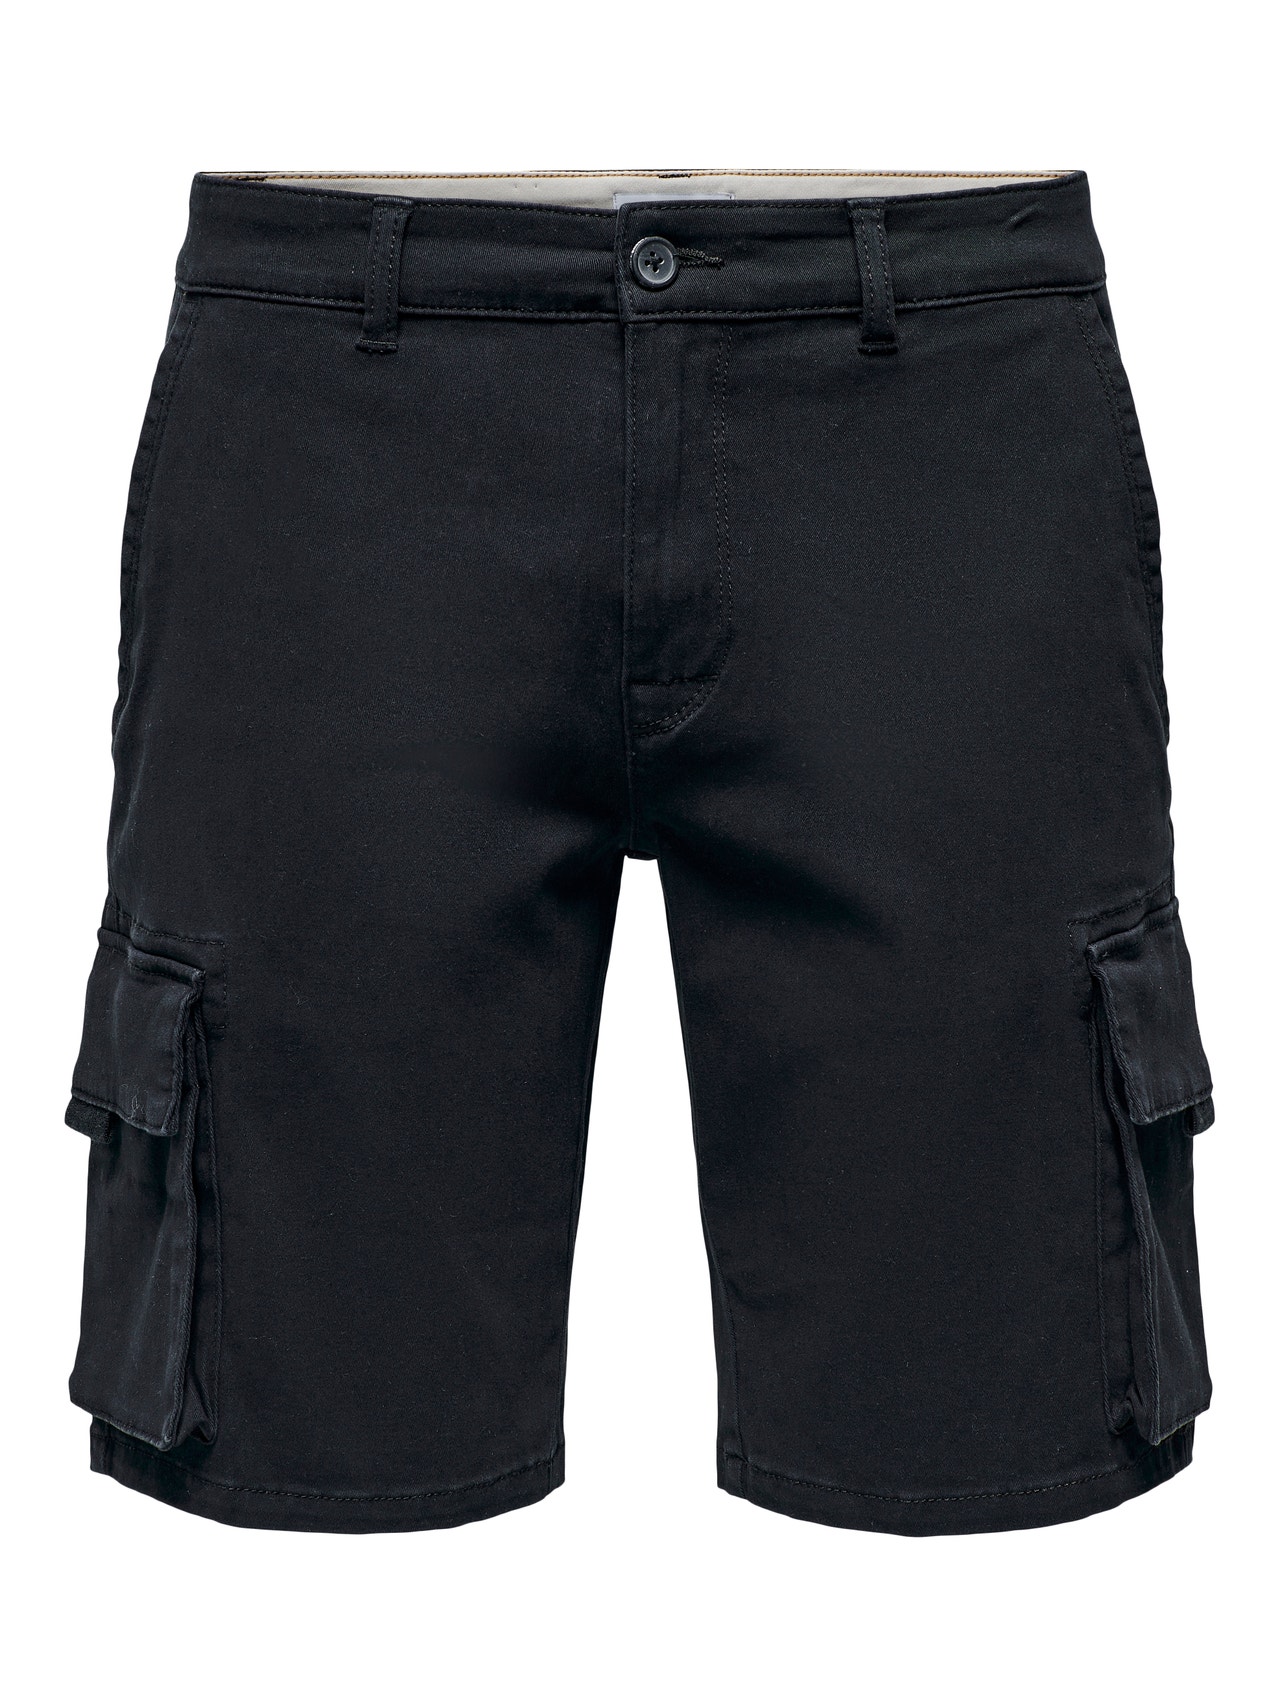 adviicd cotton Shorts Men Men's Casual Chino 10.5 Shorts Male Cargo Shorts  